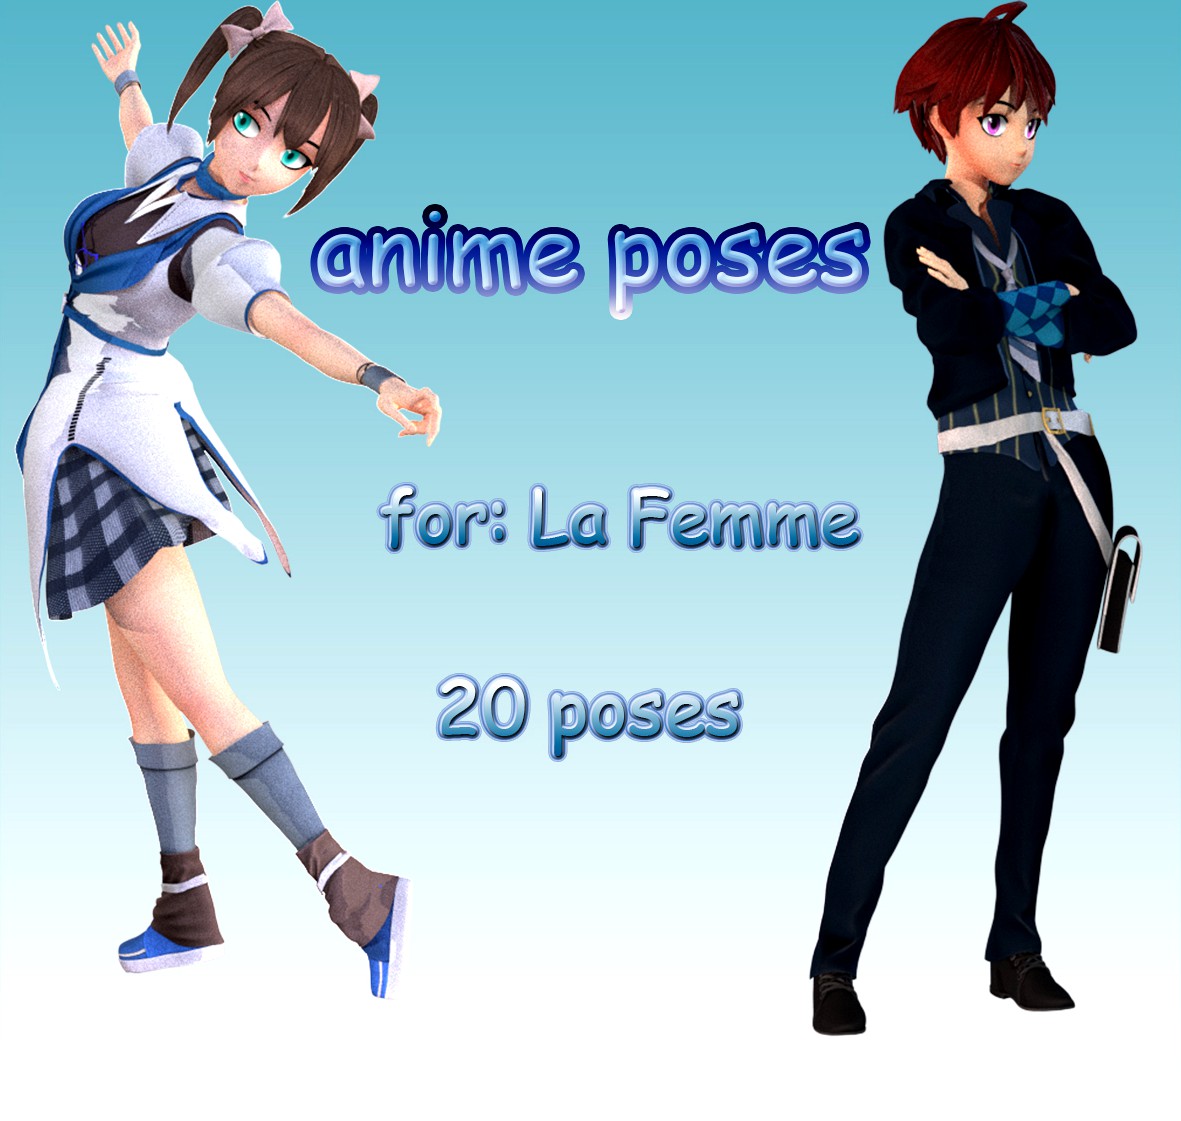 Anime Poses for La Femme Anime Boy and La Femme Anime Girl